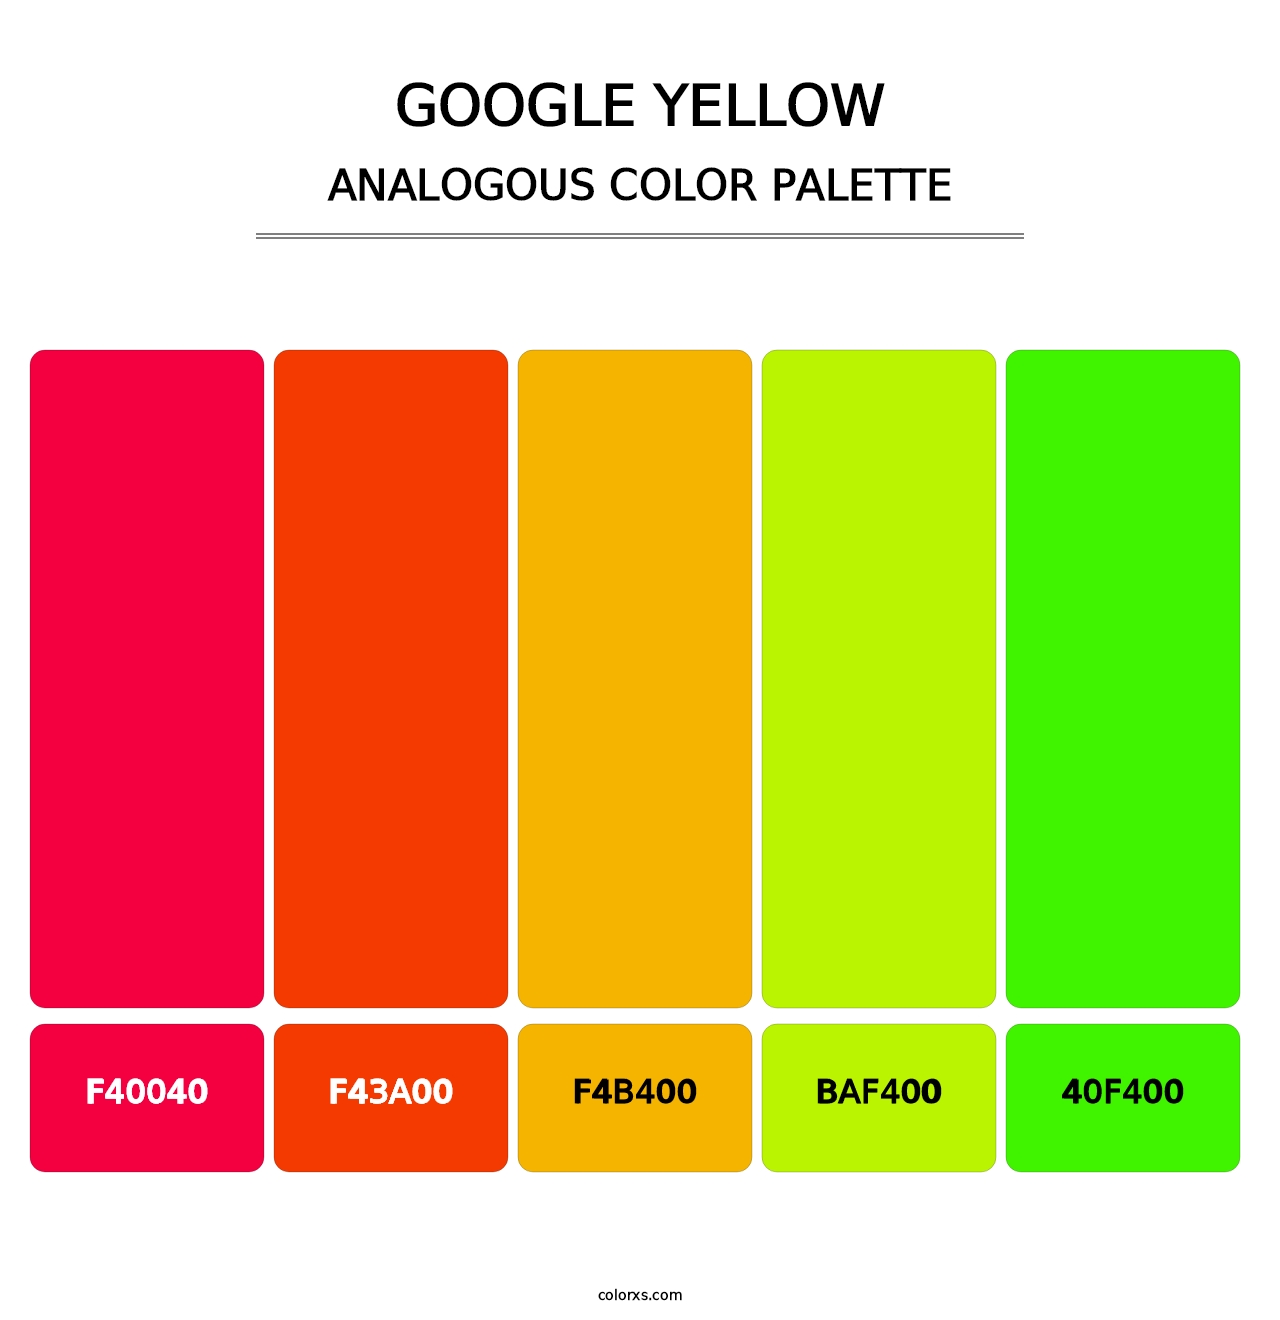 Google Yellow - Analogous Color Palette